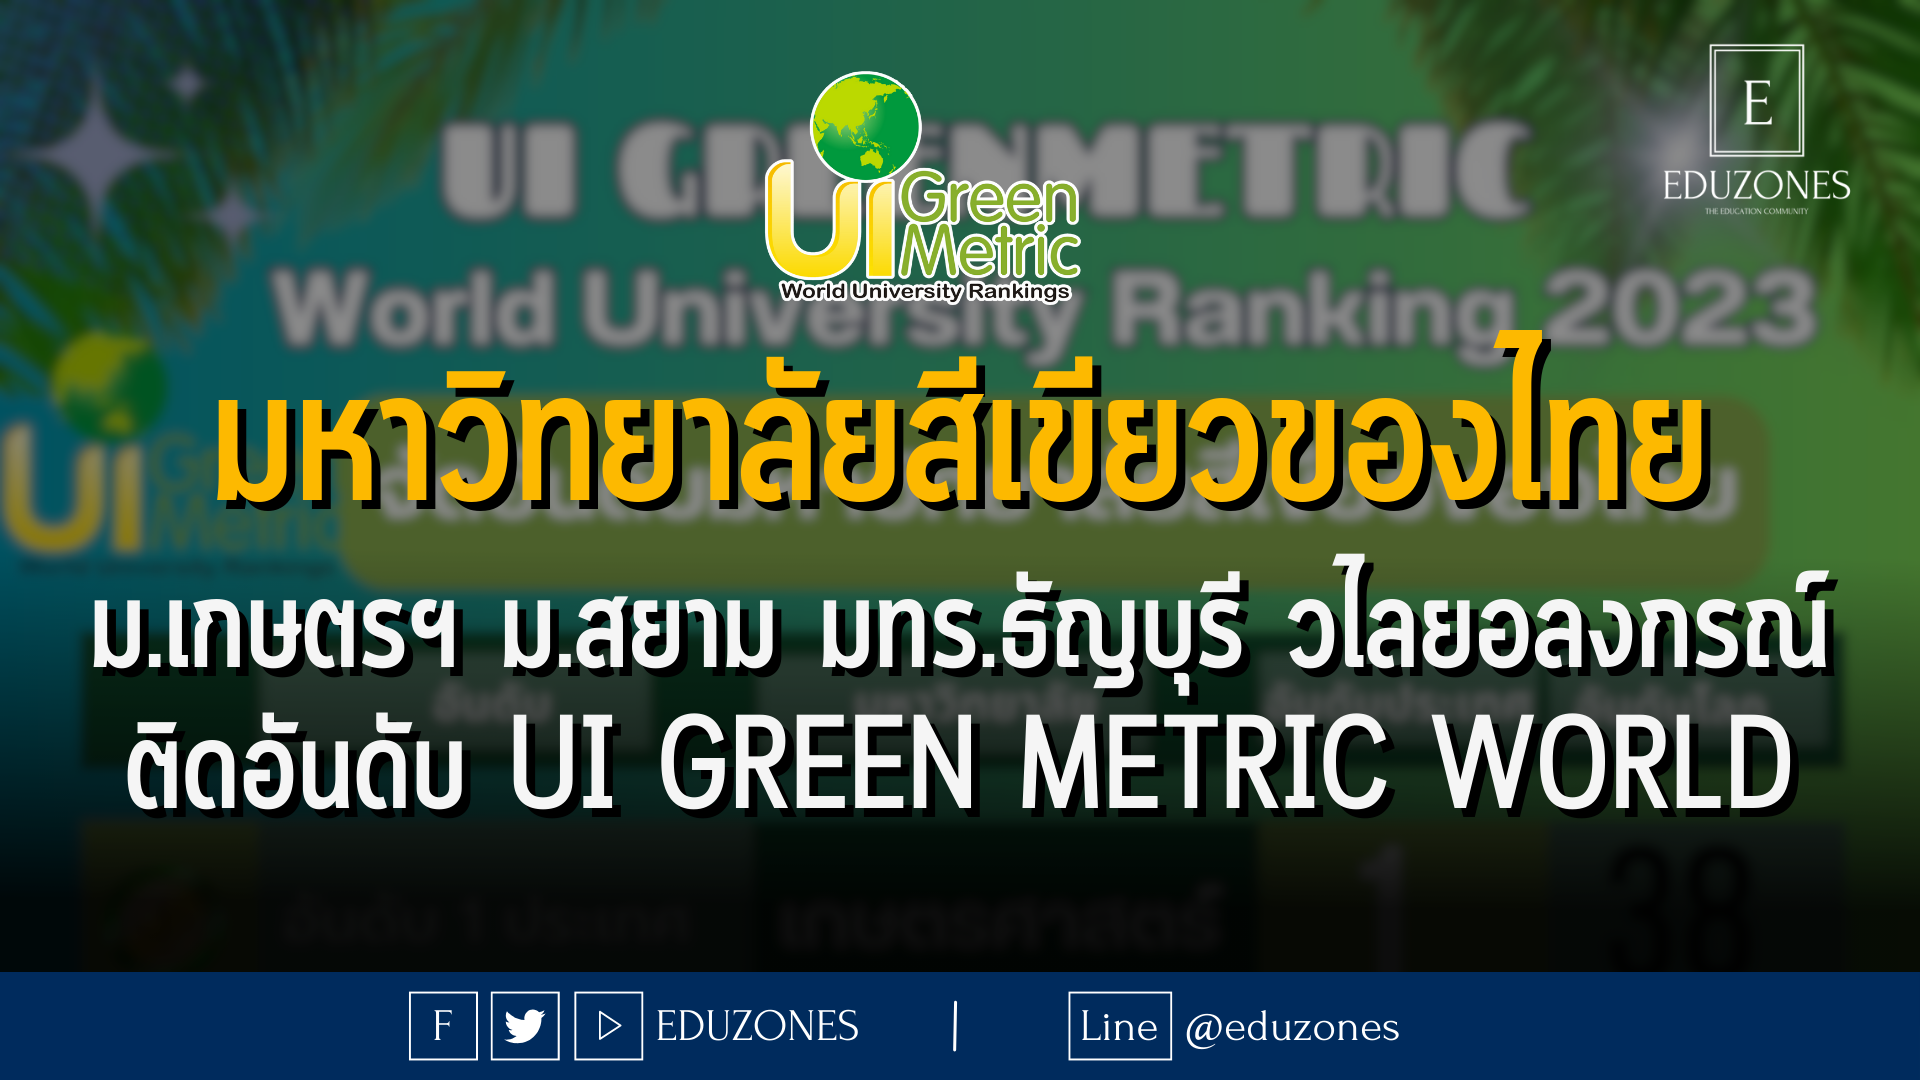 UI Green Metric World University Ranking 2023 : ผลการจัดอันดับมหาวิทยาลัยสีเขียวของไทย ม.เกษตรฯ ม.สยาม มทร.ธัญบุรี และวไลยอลงกรณ์